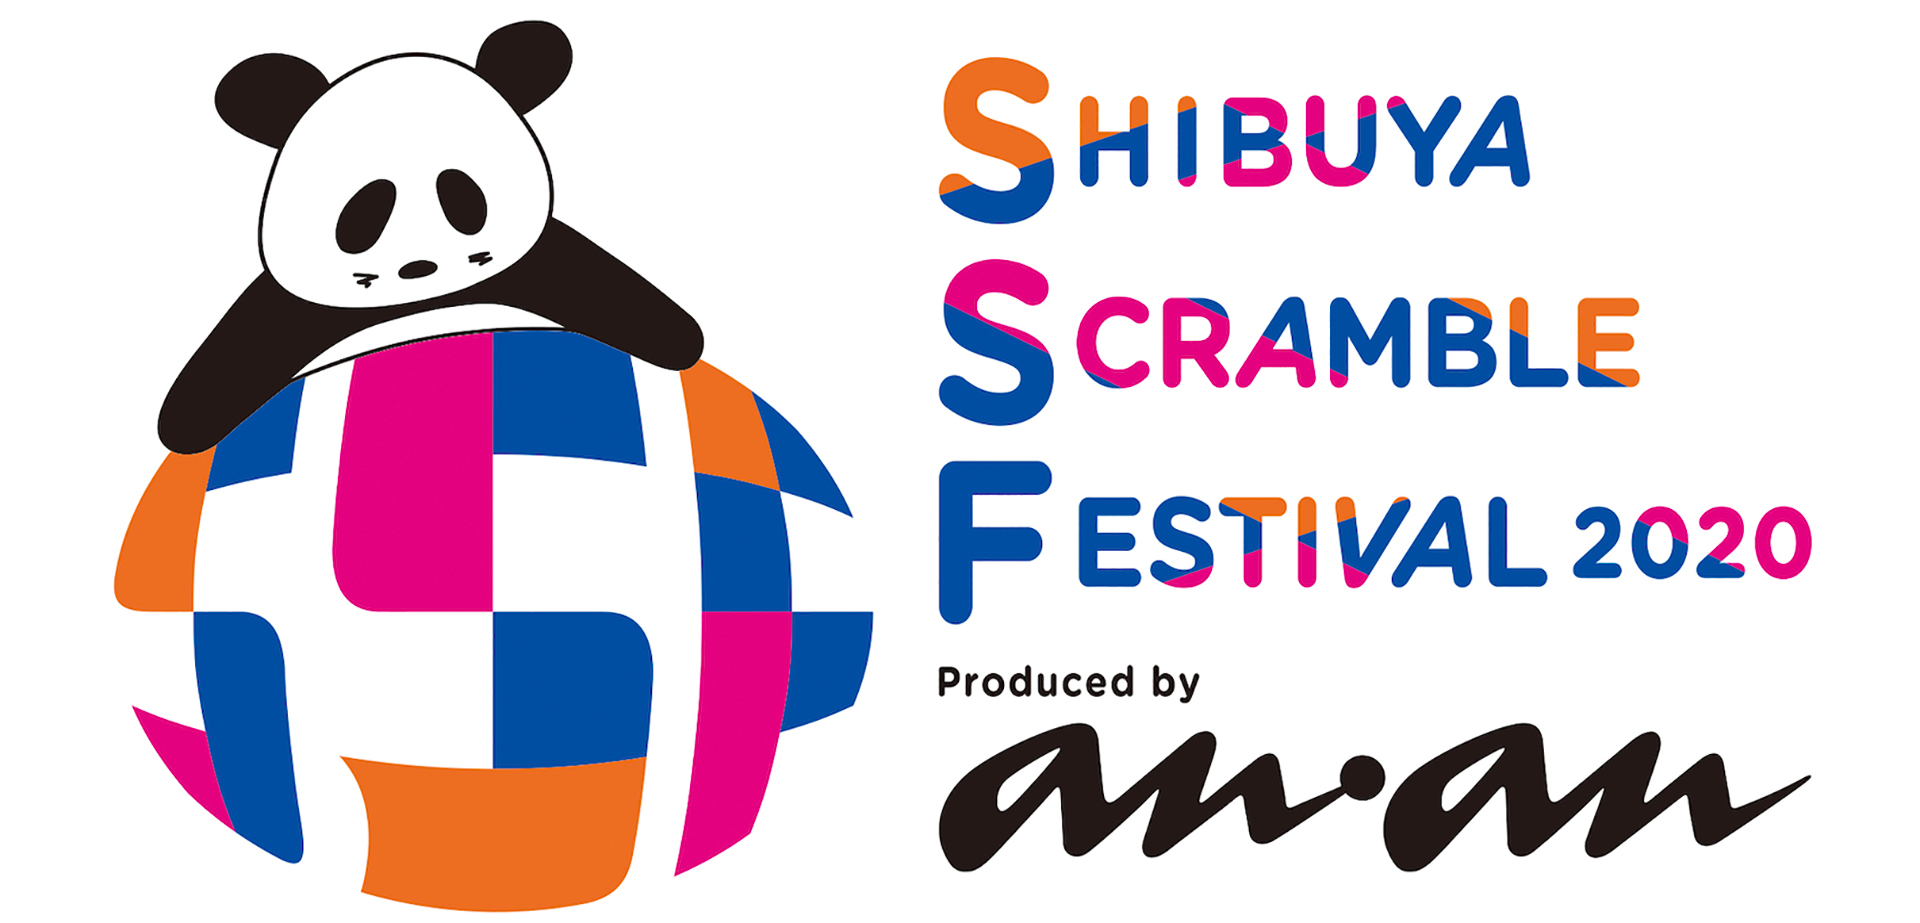 SHIBUYA SCRAMBLE FESTIVAL 2020 Produced by anan